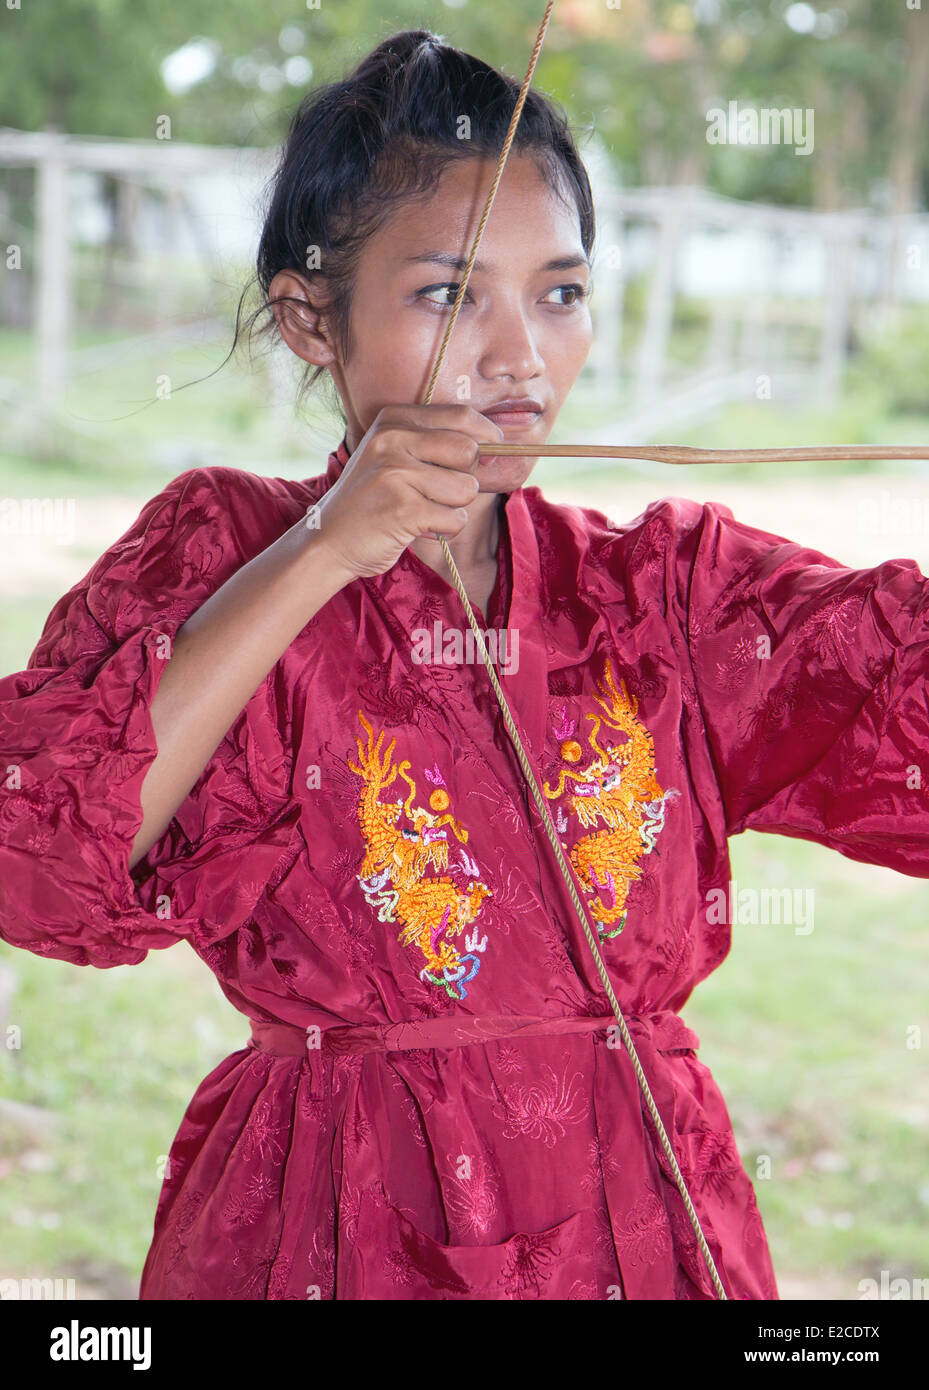 girl practicing archery Stock Photo